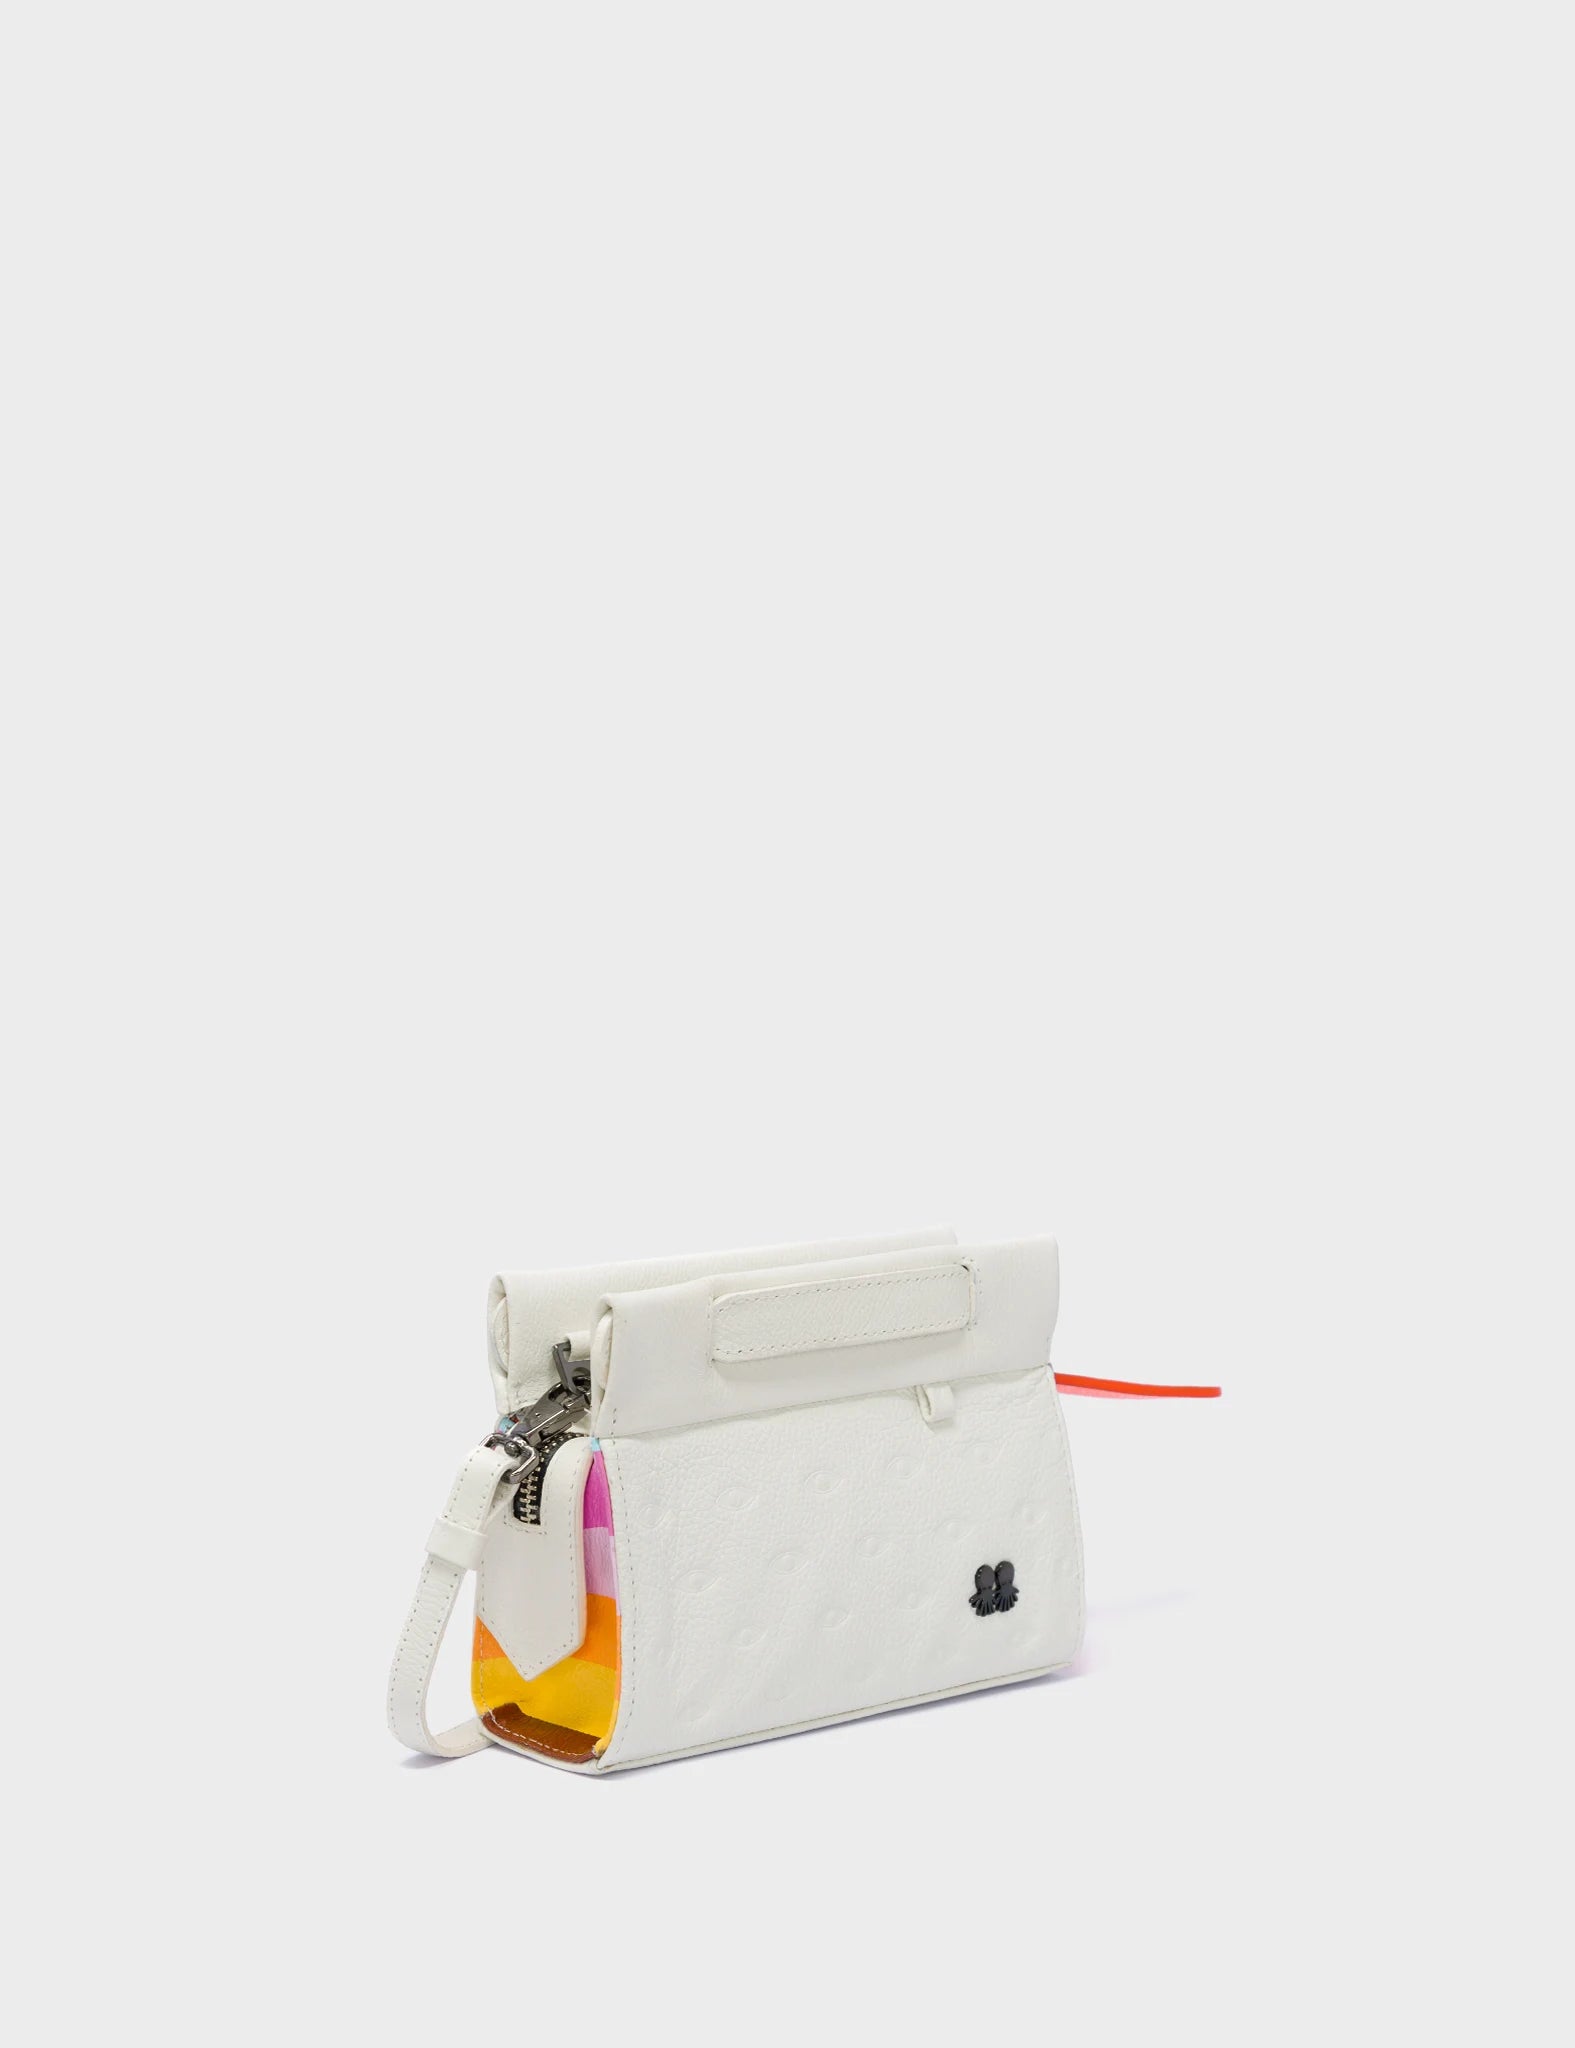 Vali Crossbody Micro Cream Leather Bag - Groovin’ Rainbow Design